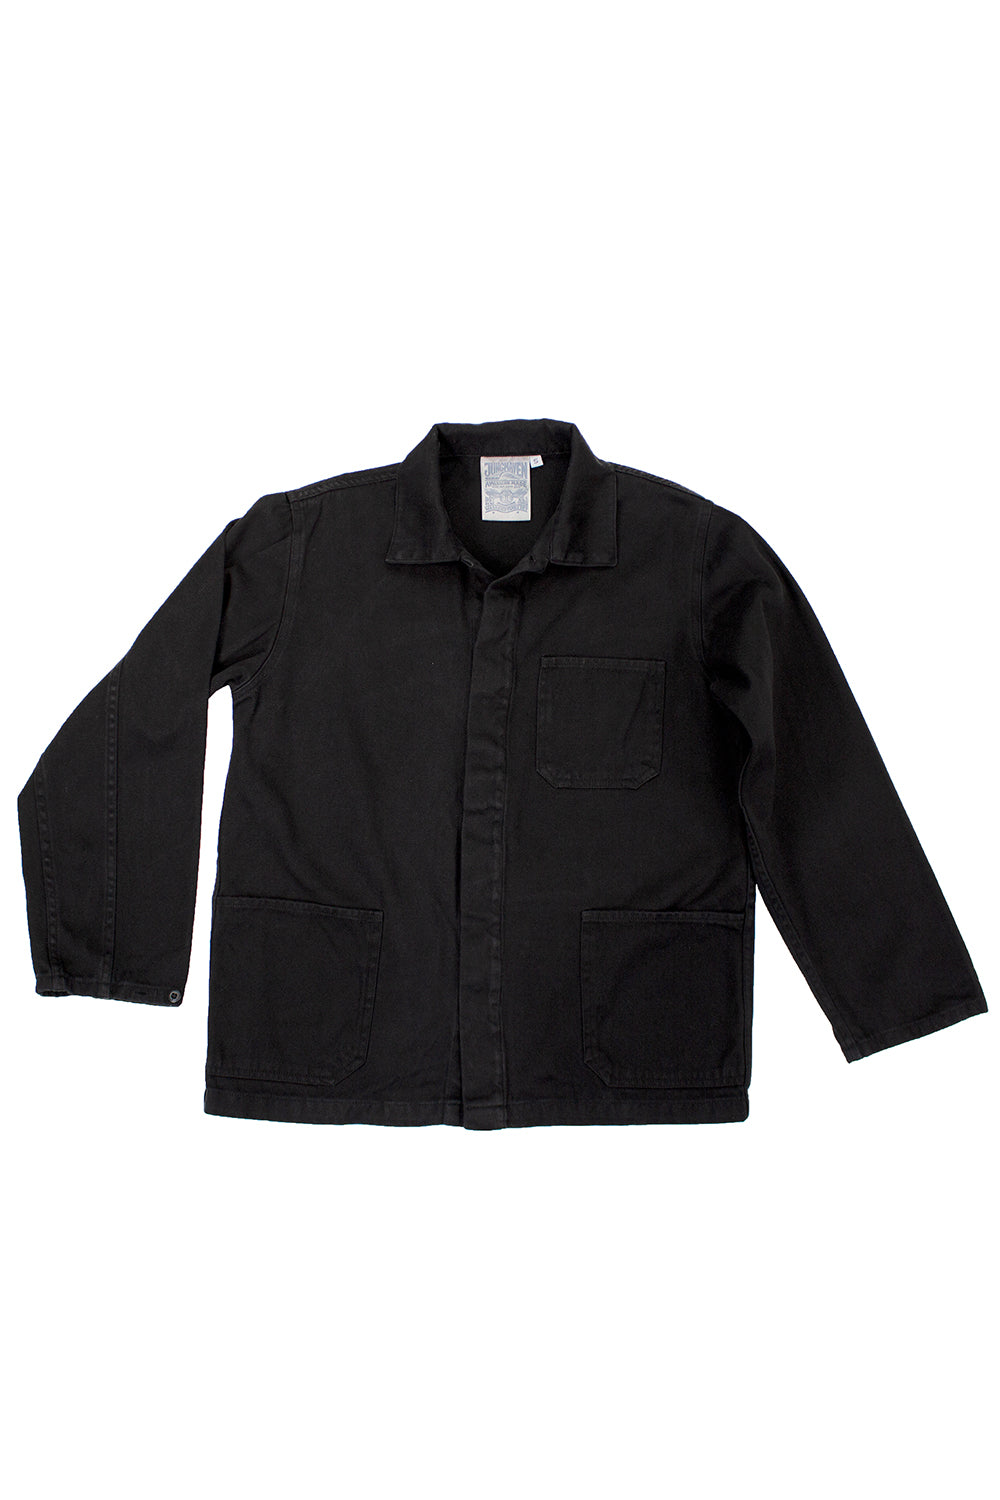 Olympic Jacket | Jungmaven Hemp Clothing & Accessories / Color: Black